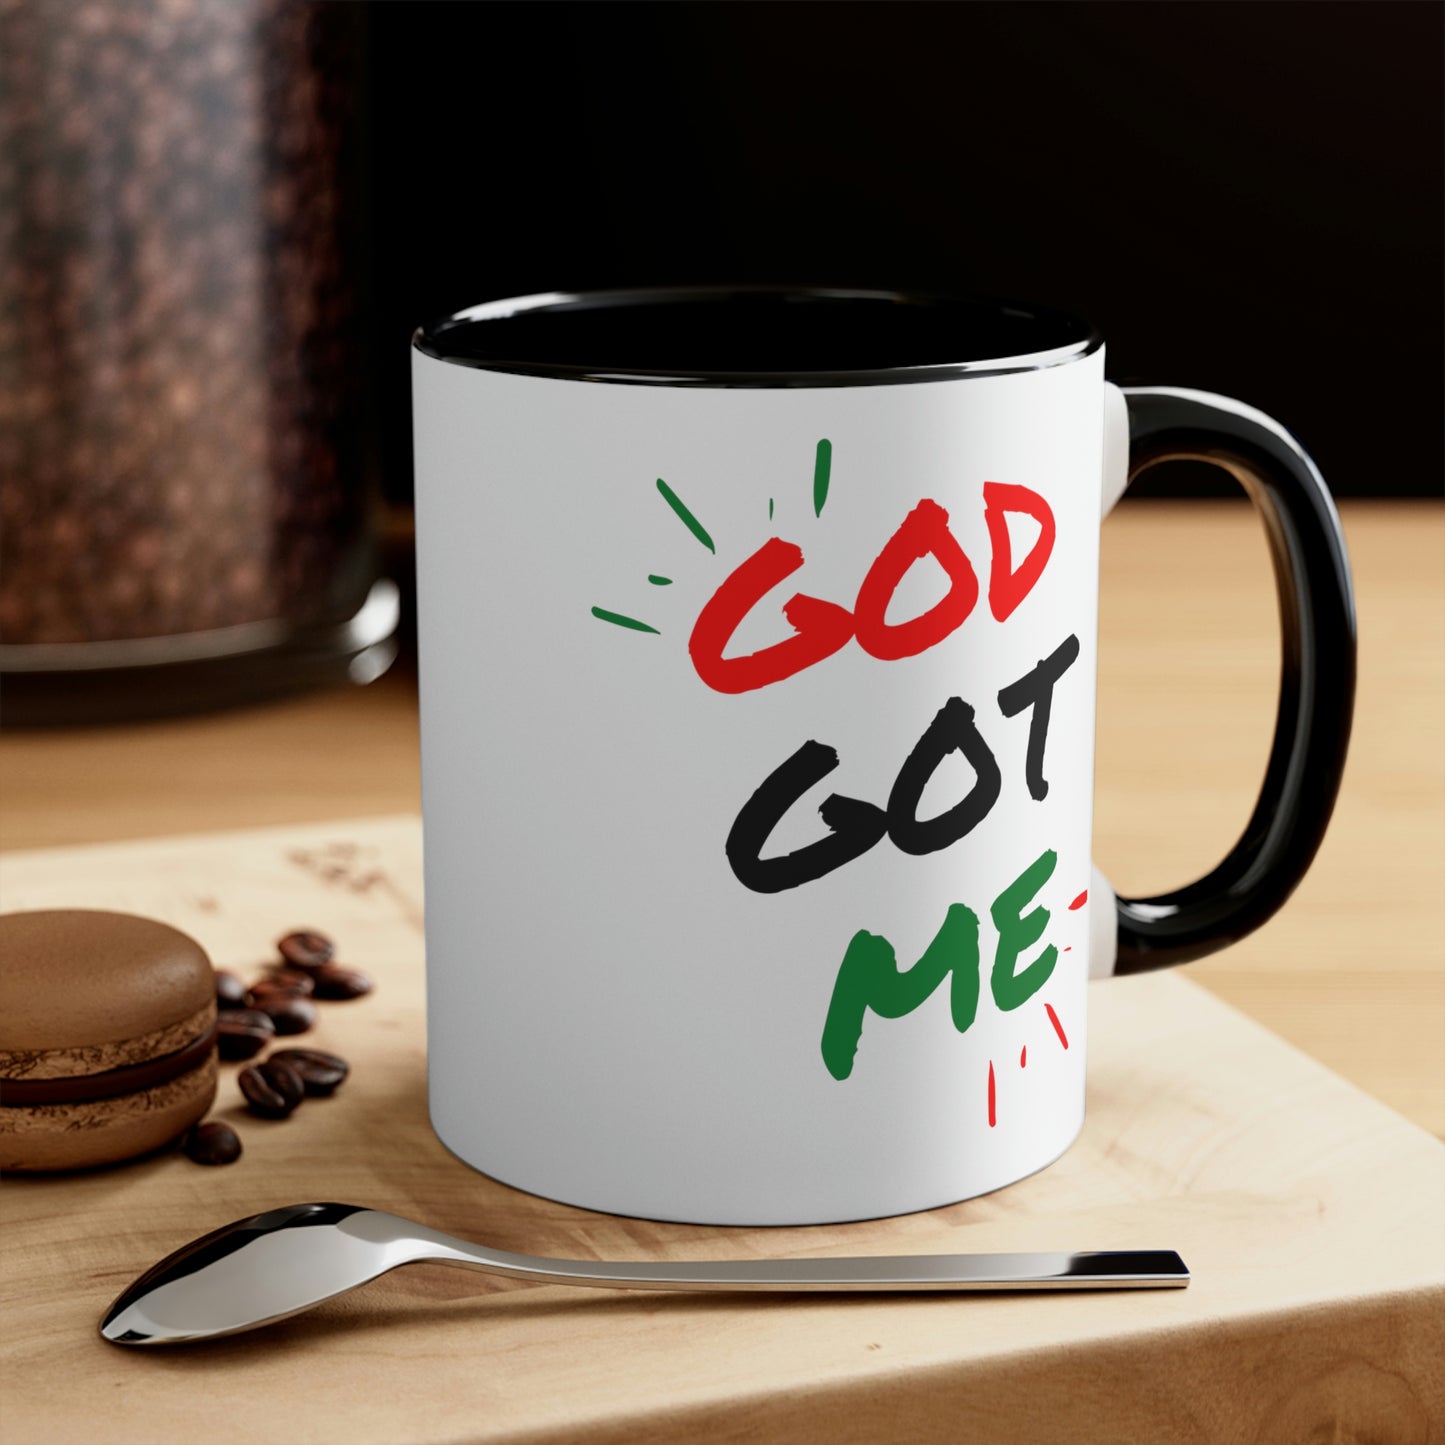 "God Got Me" Mug, 11oz